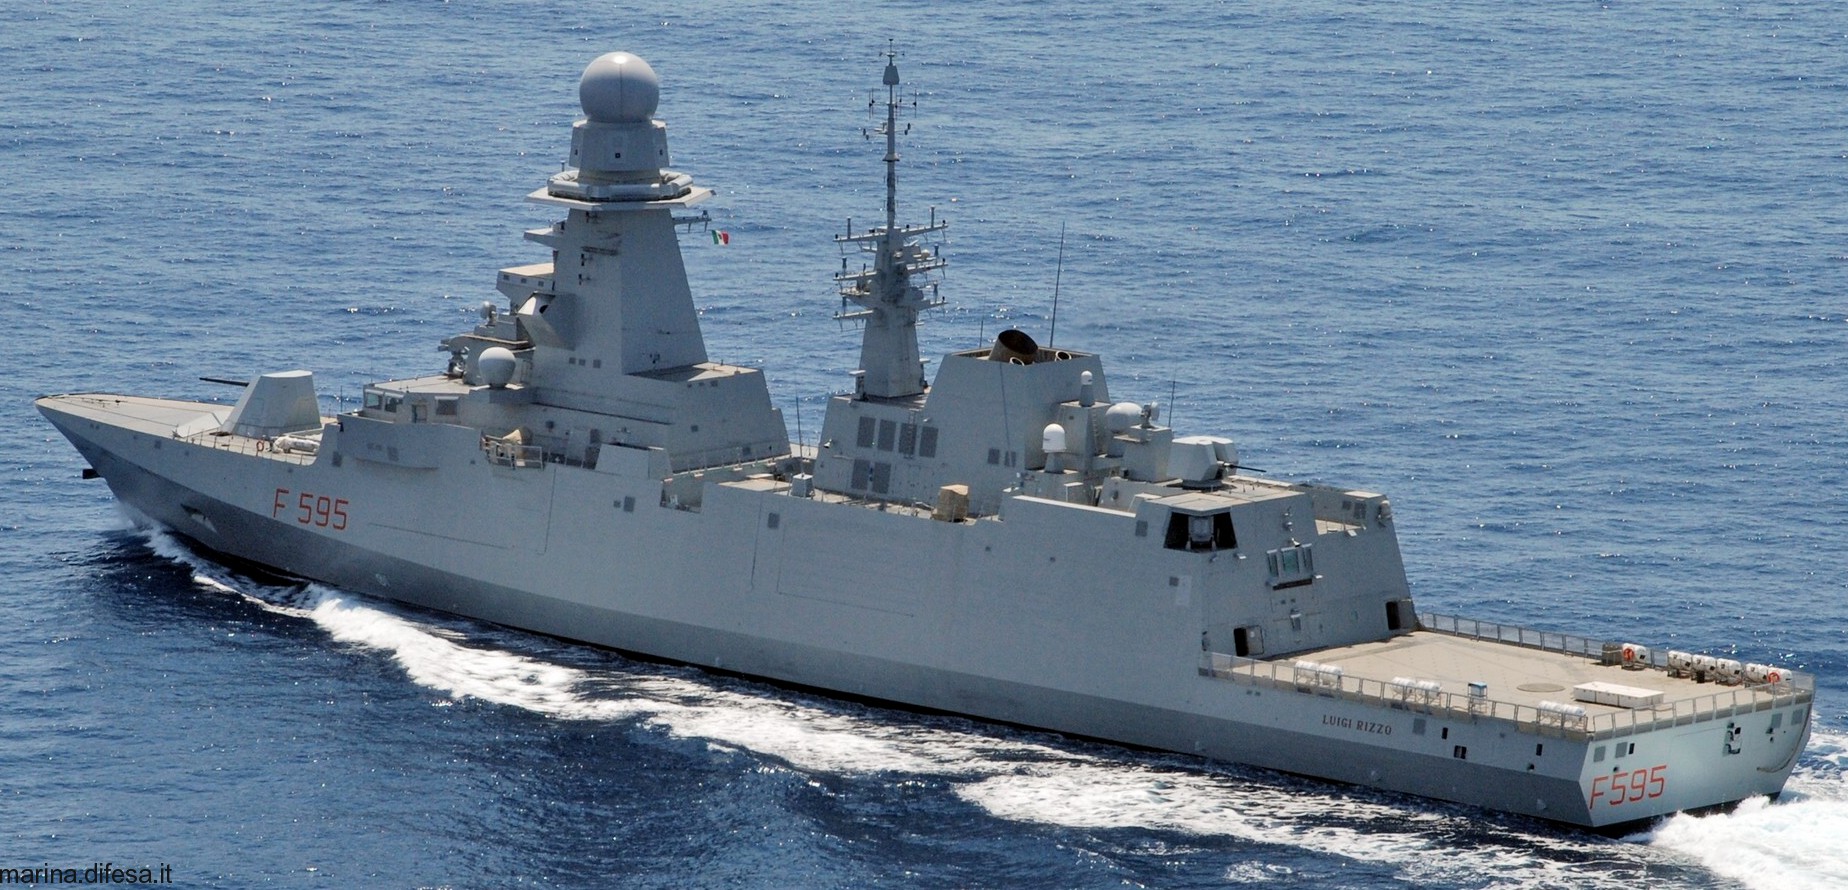 f-595 luigi rizzo its nave bergamini fremm class guided missile frigate italian navy marina militare 18